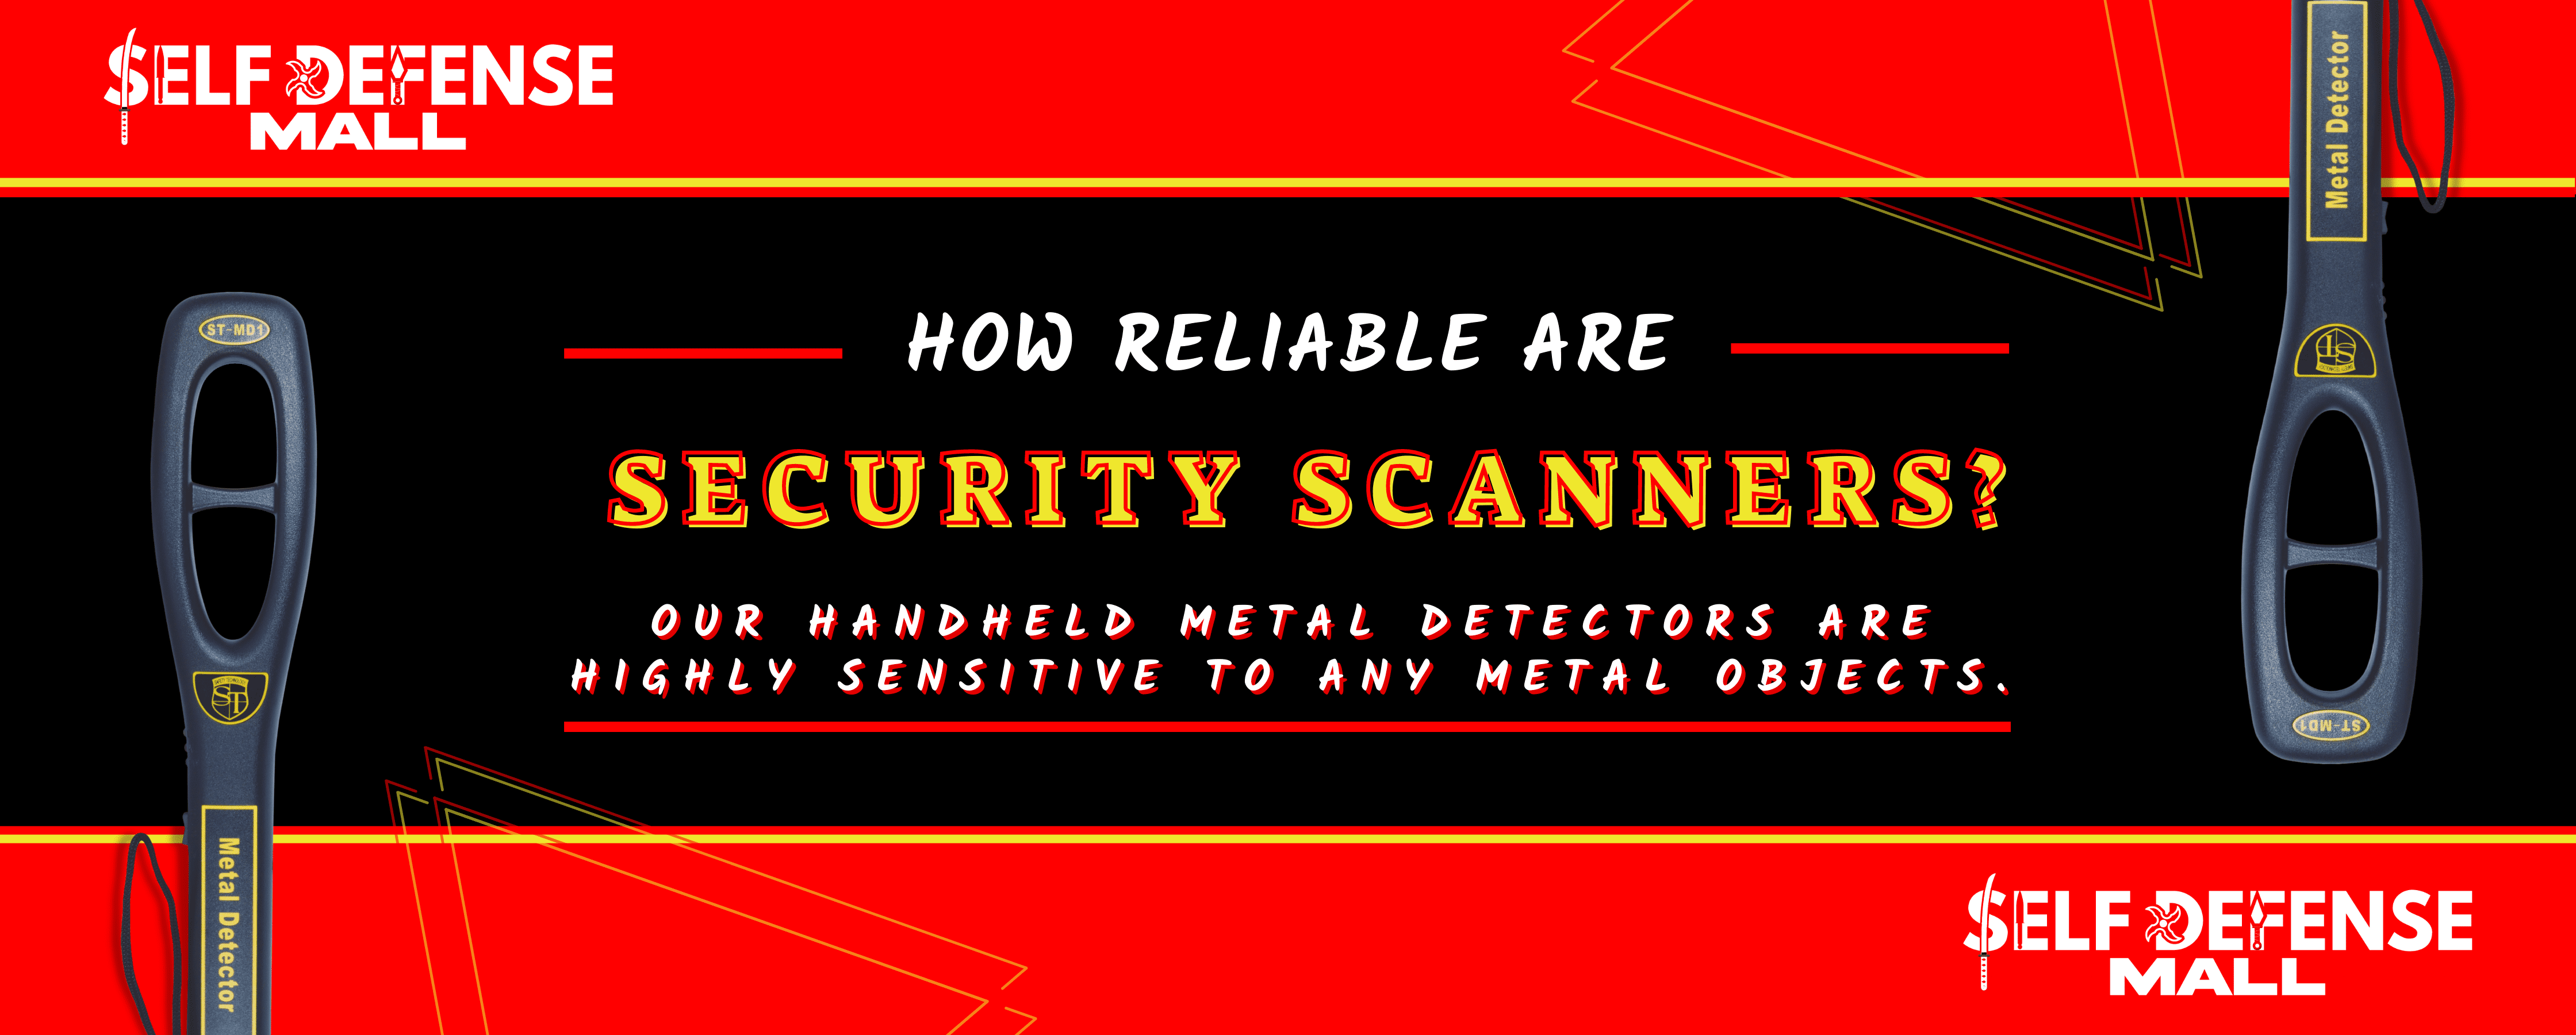 Security Scanner | Security Metal Detector | Handheld Security Scanner | Handheld Security Metal Detector